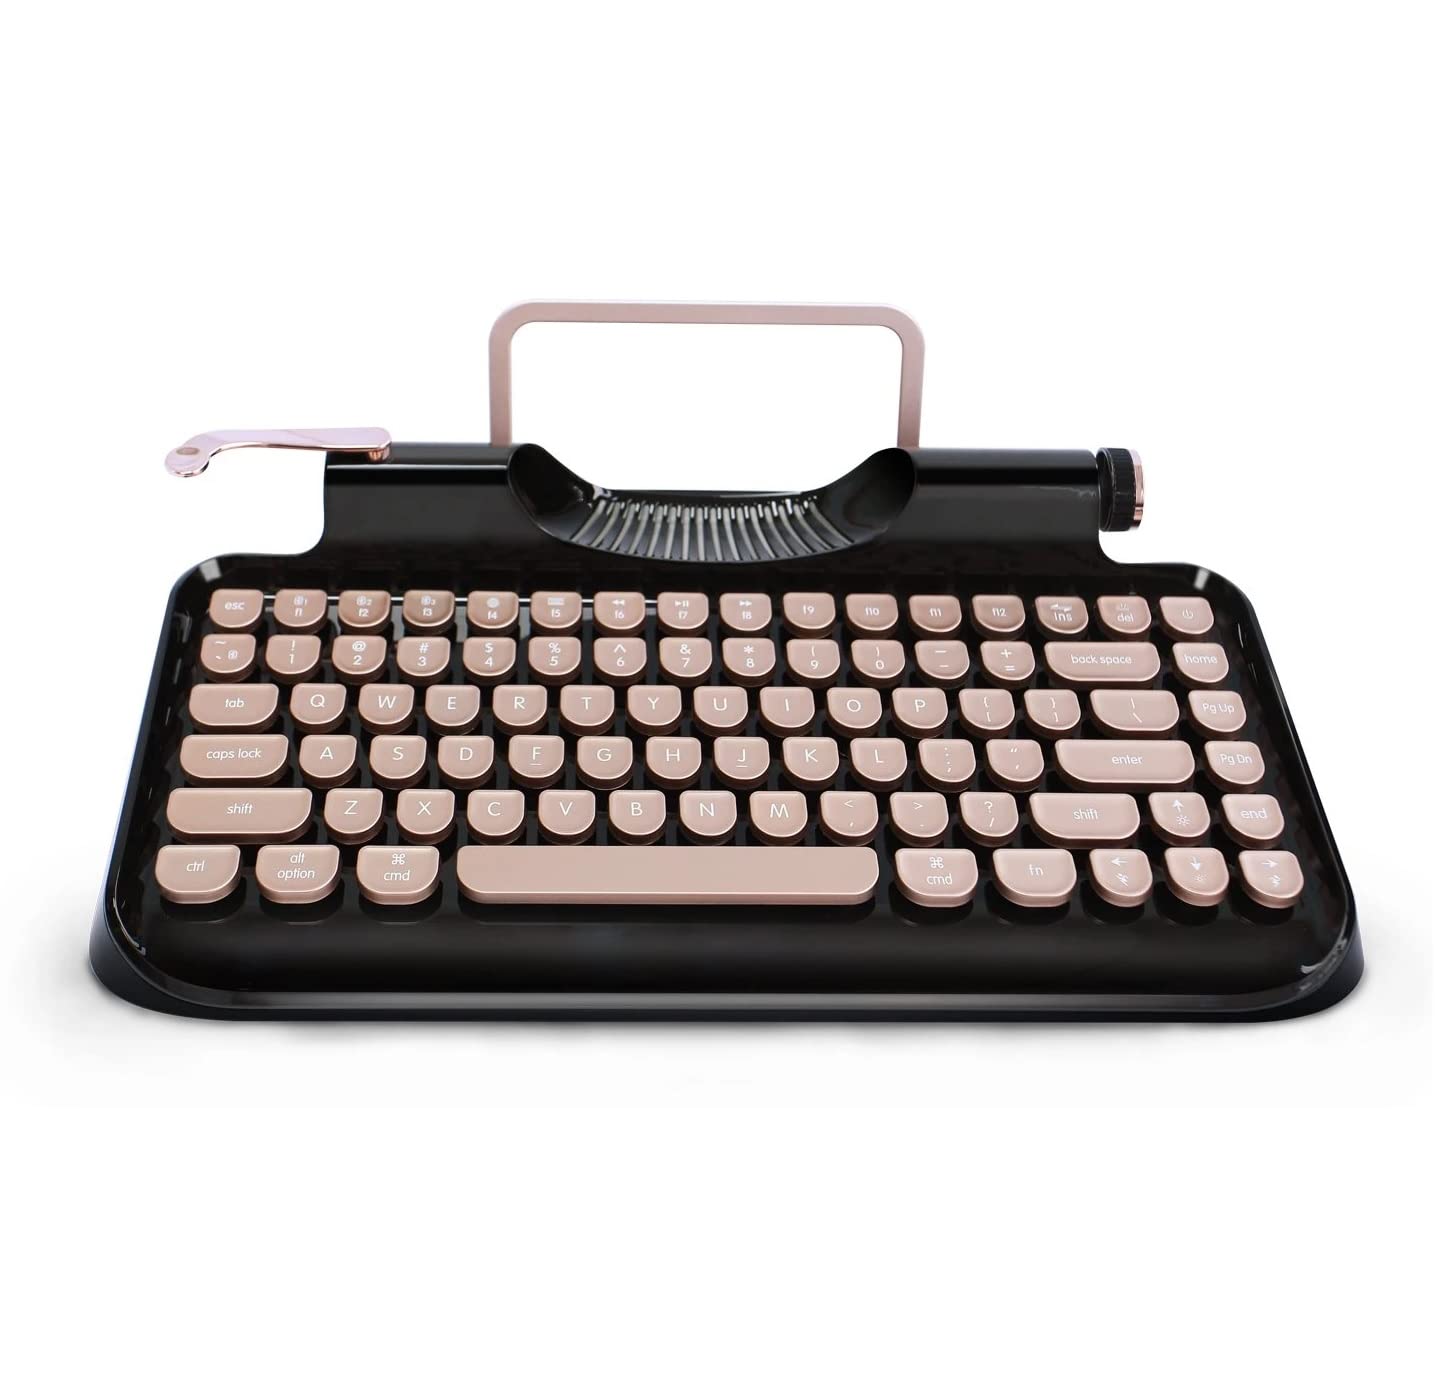 Amazon Typewriter Style Keyboard